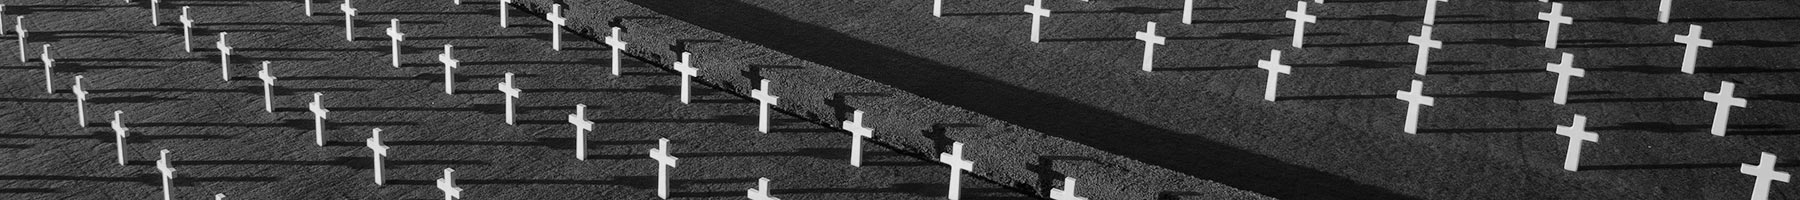 rows of headstones at Cambridge American Cemetery